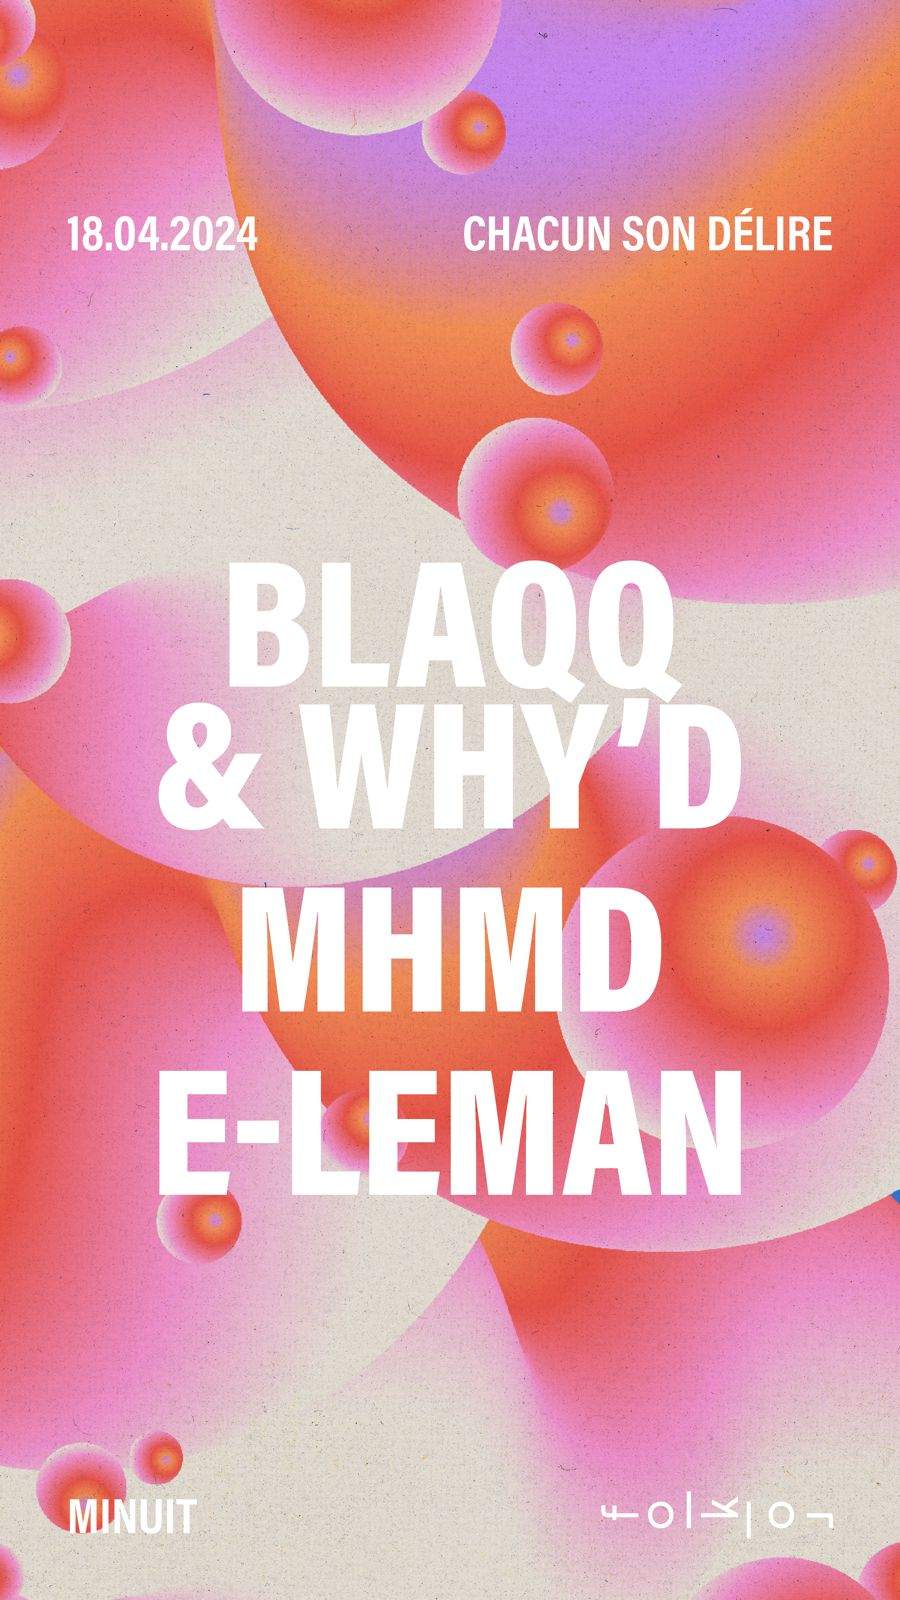 Chacun Son Délire /// Blaqq & Why'd - MHMD - E-Leman - フライヤー表